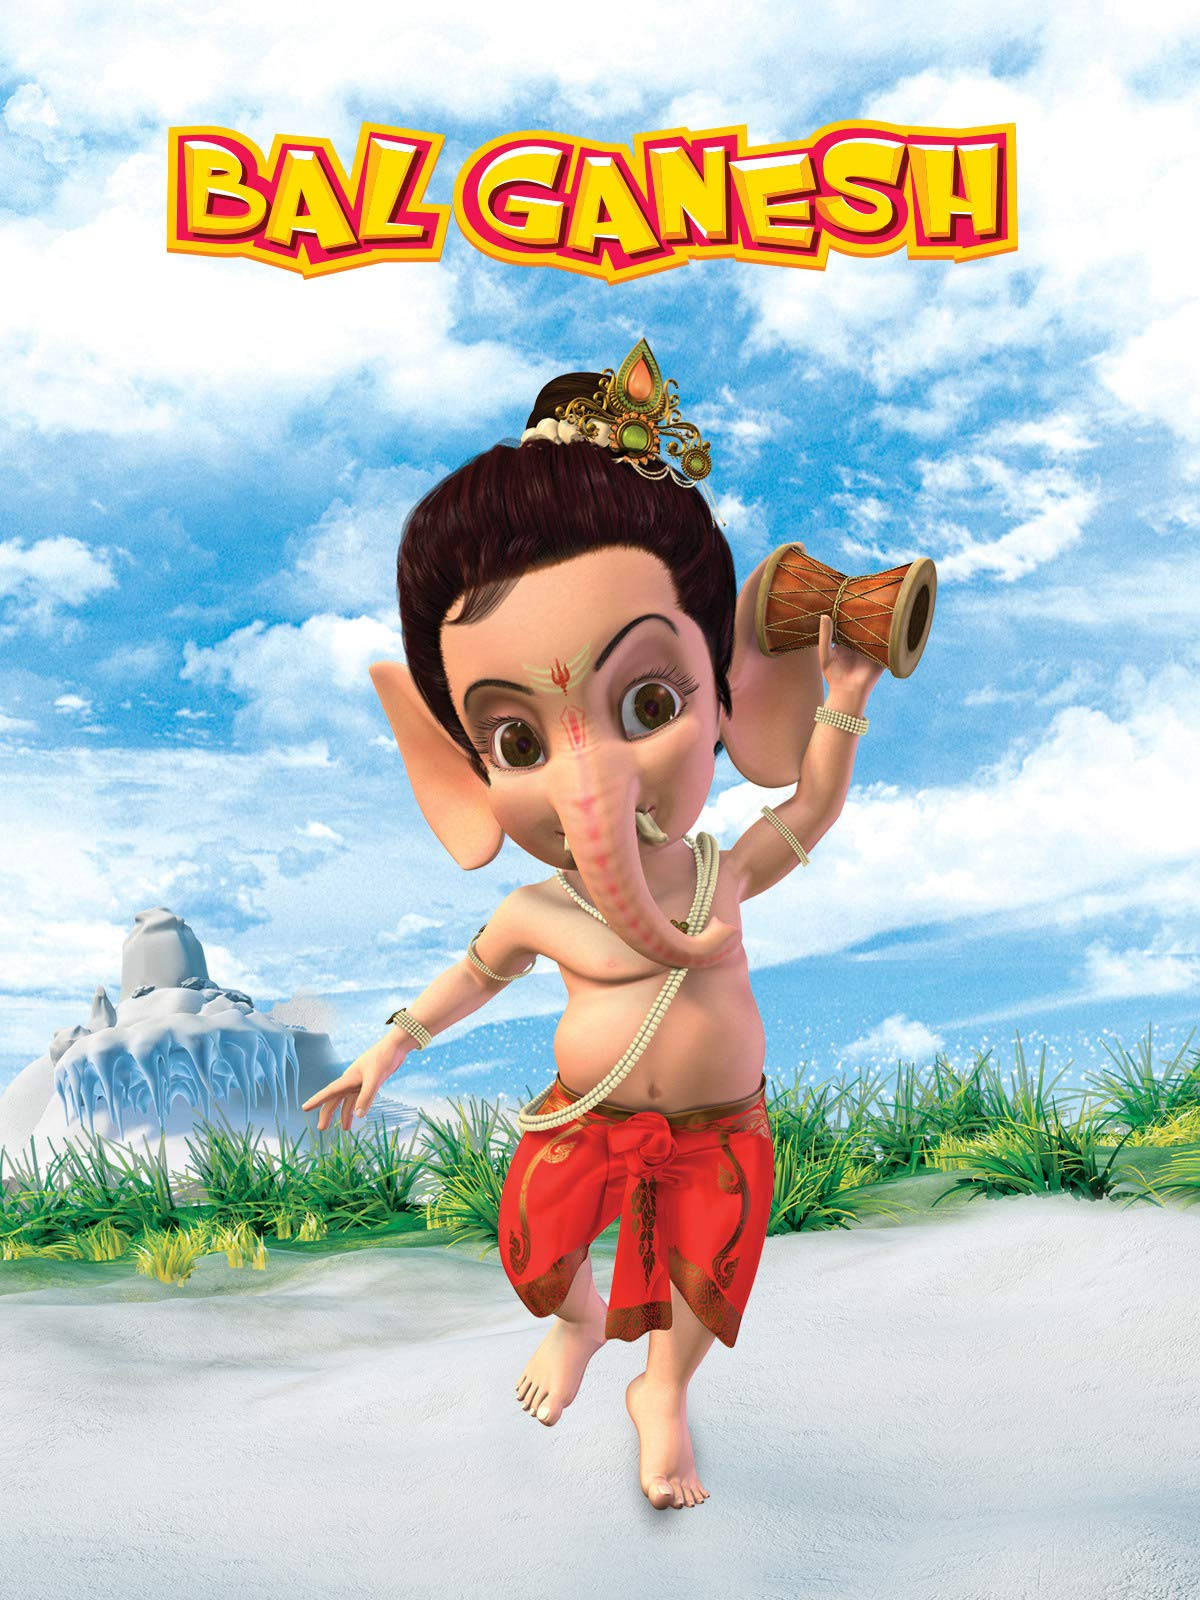 Caption: Divine Adventures of Bal Ganesh Running on Sand Wallpaper